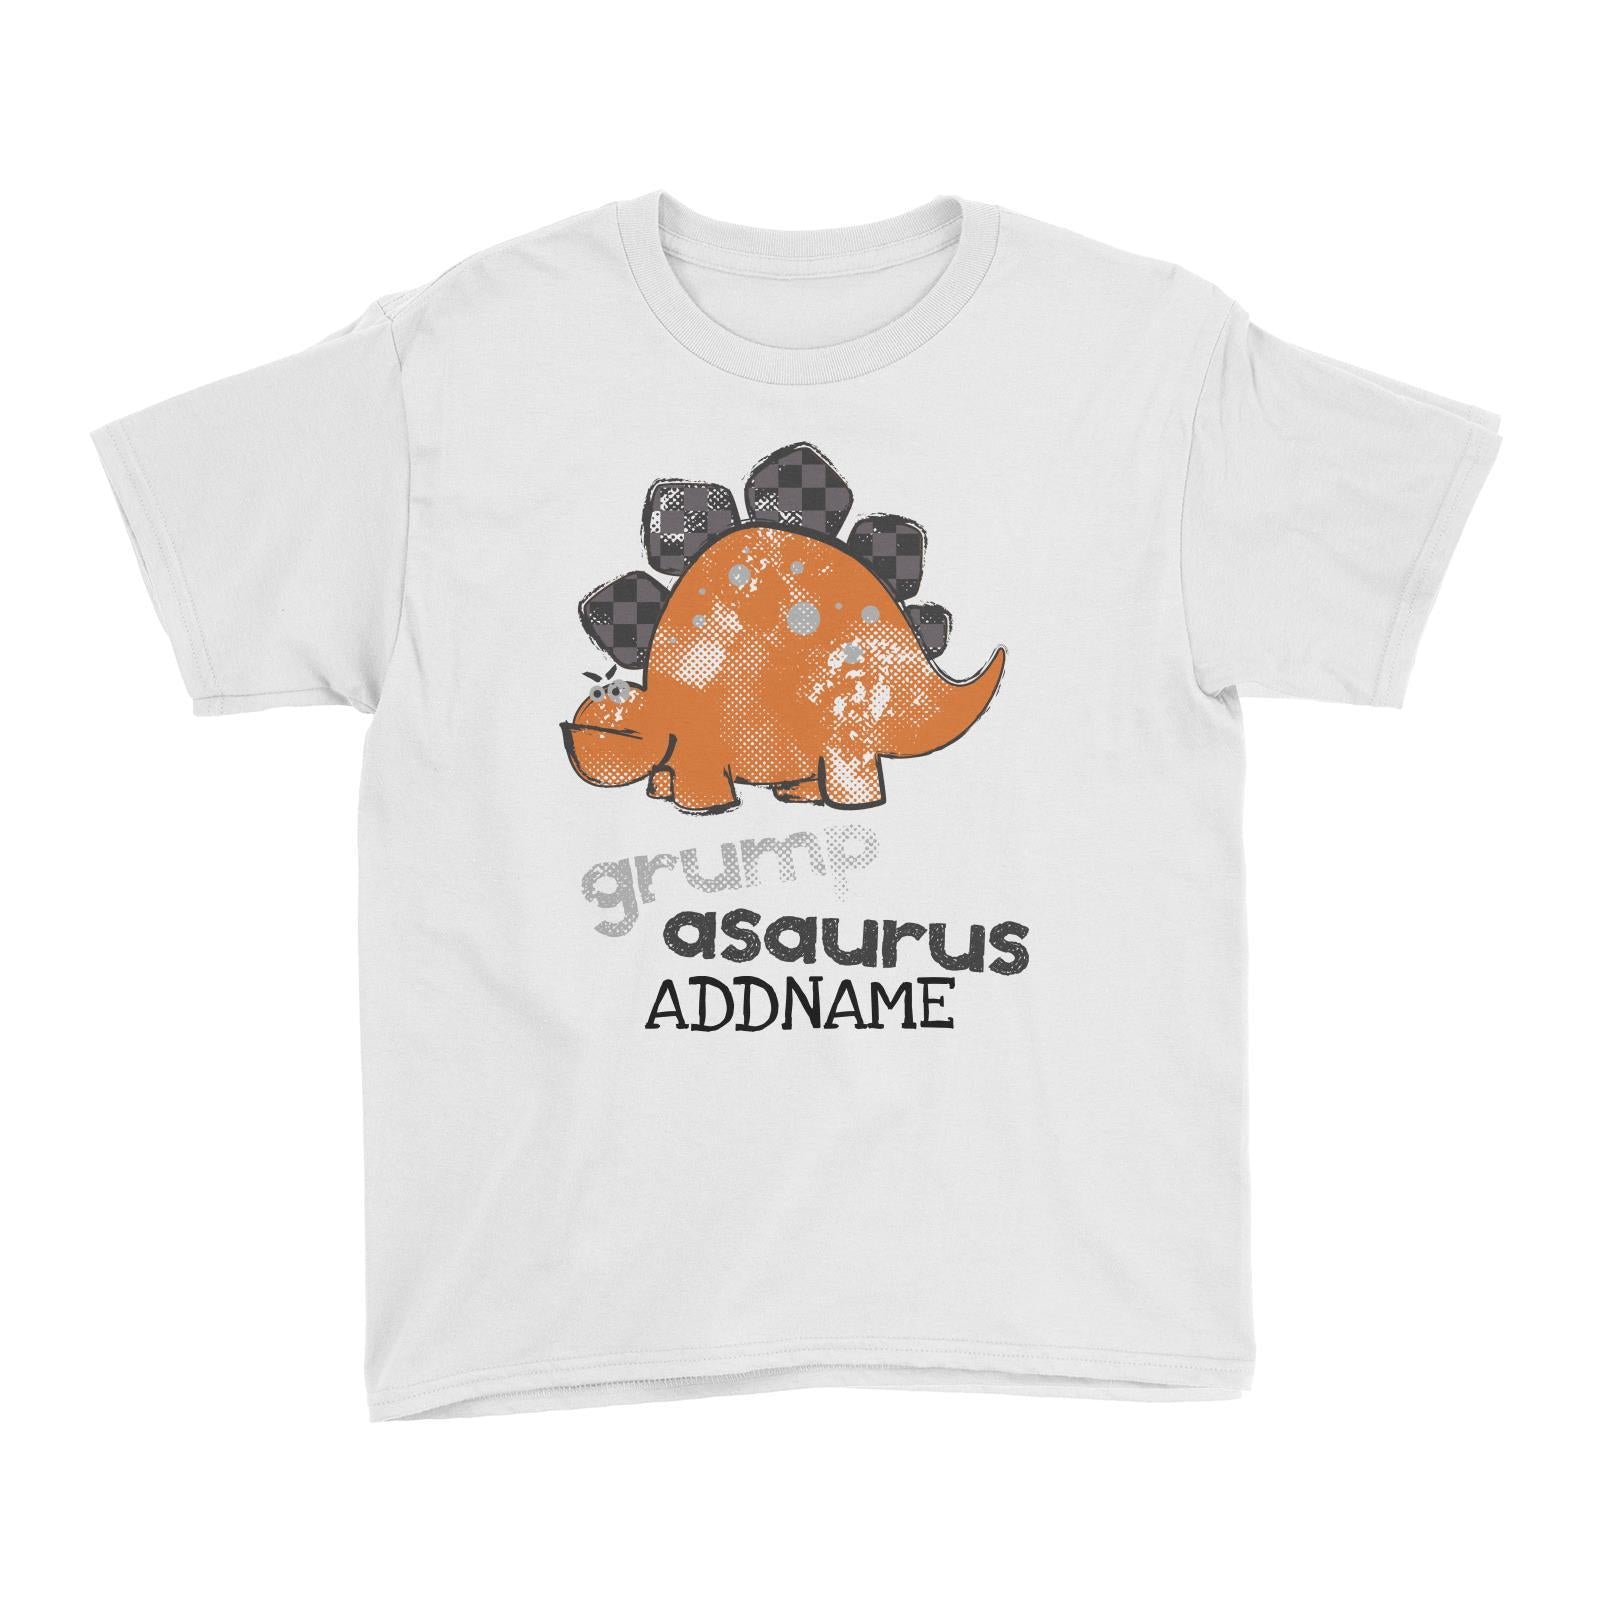 Grumpasaurus Dinosaur Addname Kid's T-Shirt